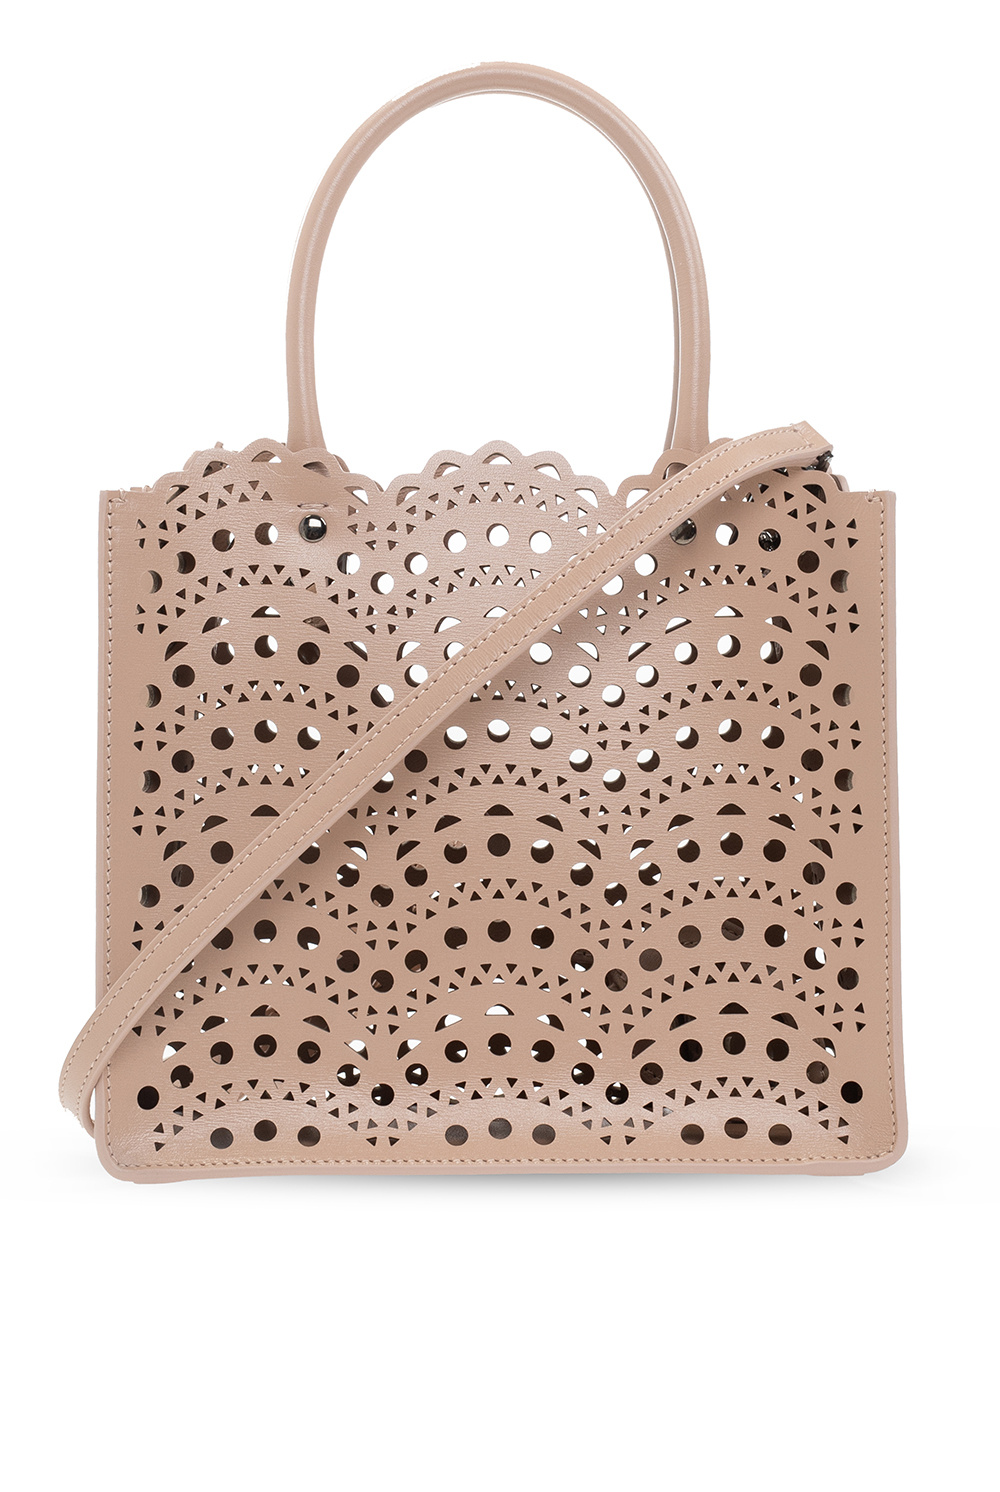 ALAÏA Women's Garance 20 Handbag